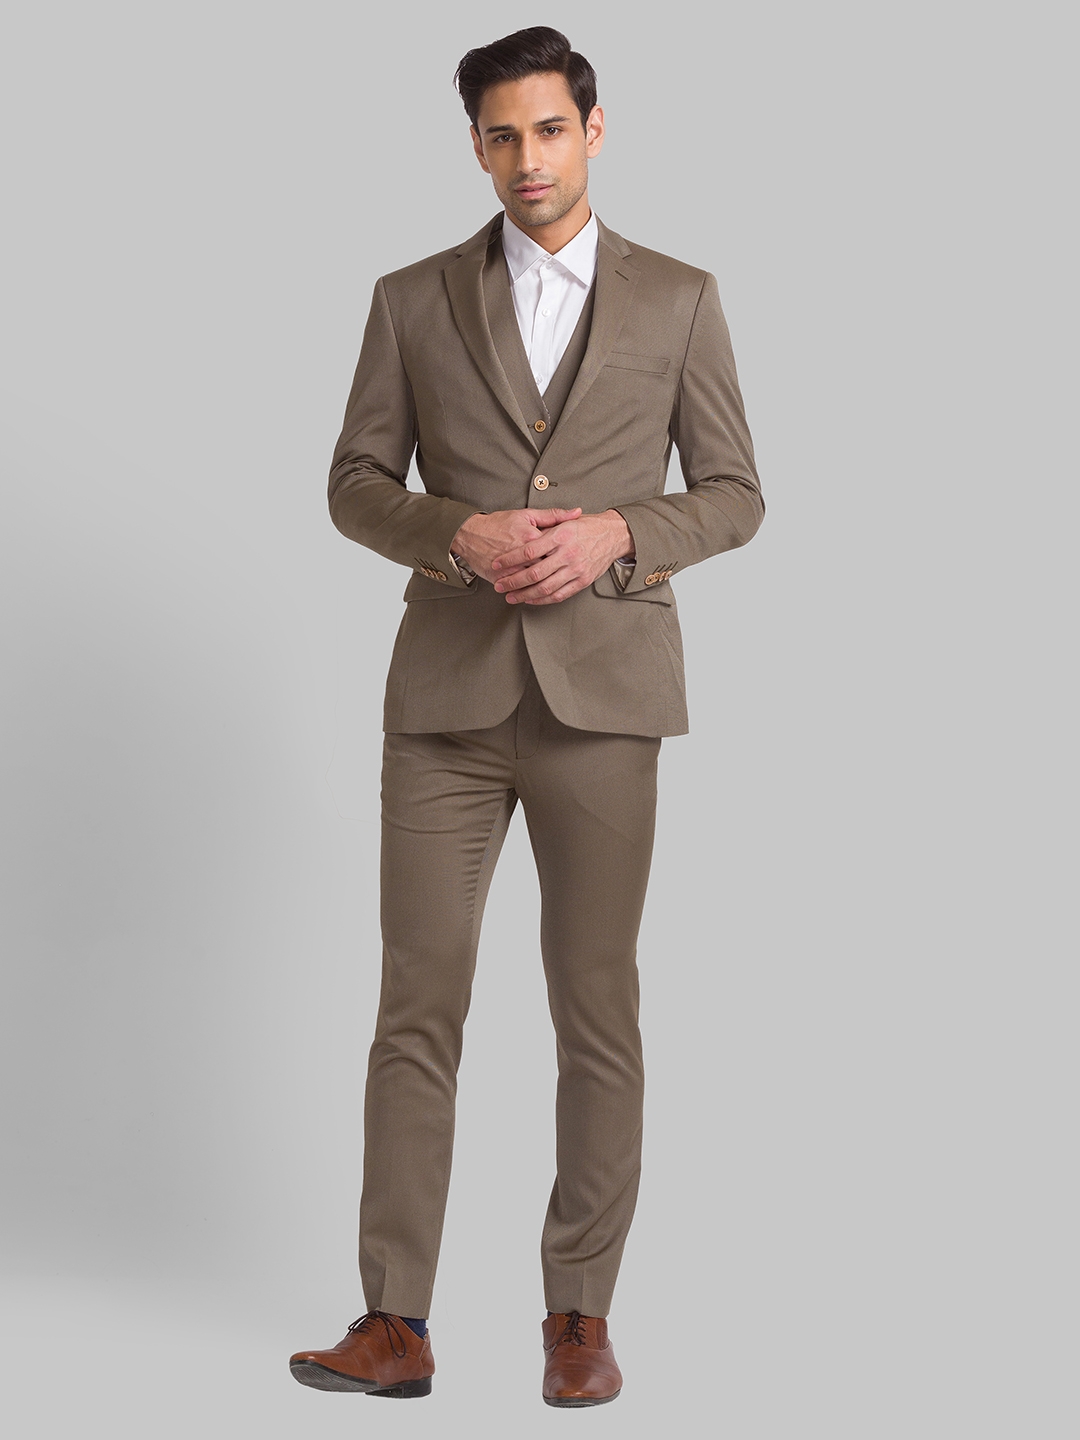 Buy Men Brown Slim Fit Print Formal Two Piece Suit Online  675901  Allen  Solly